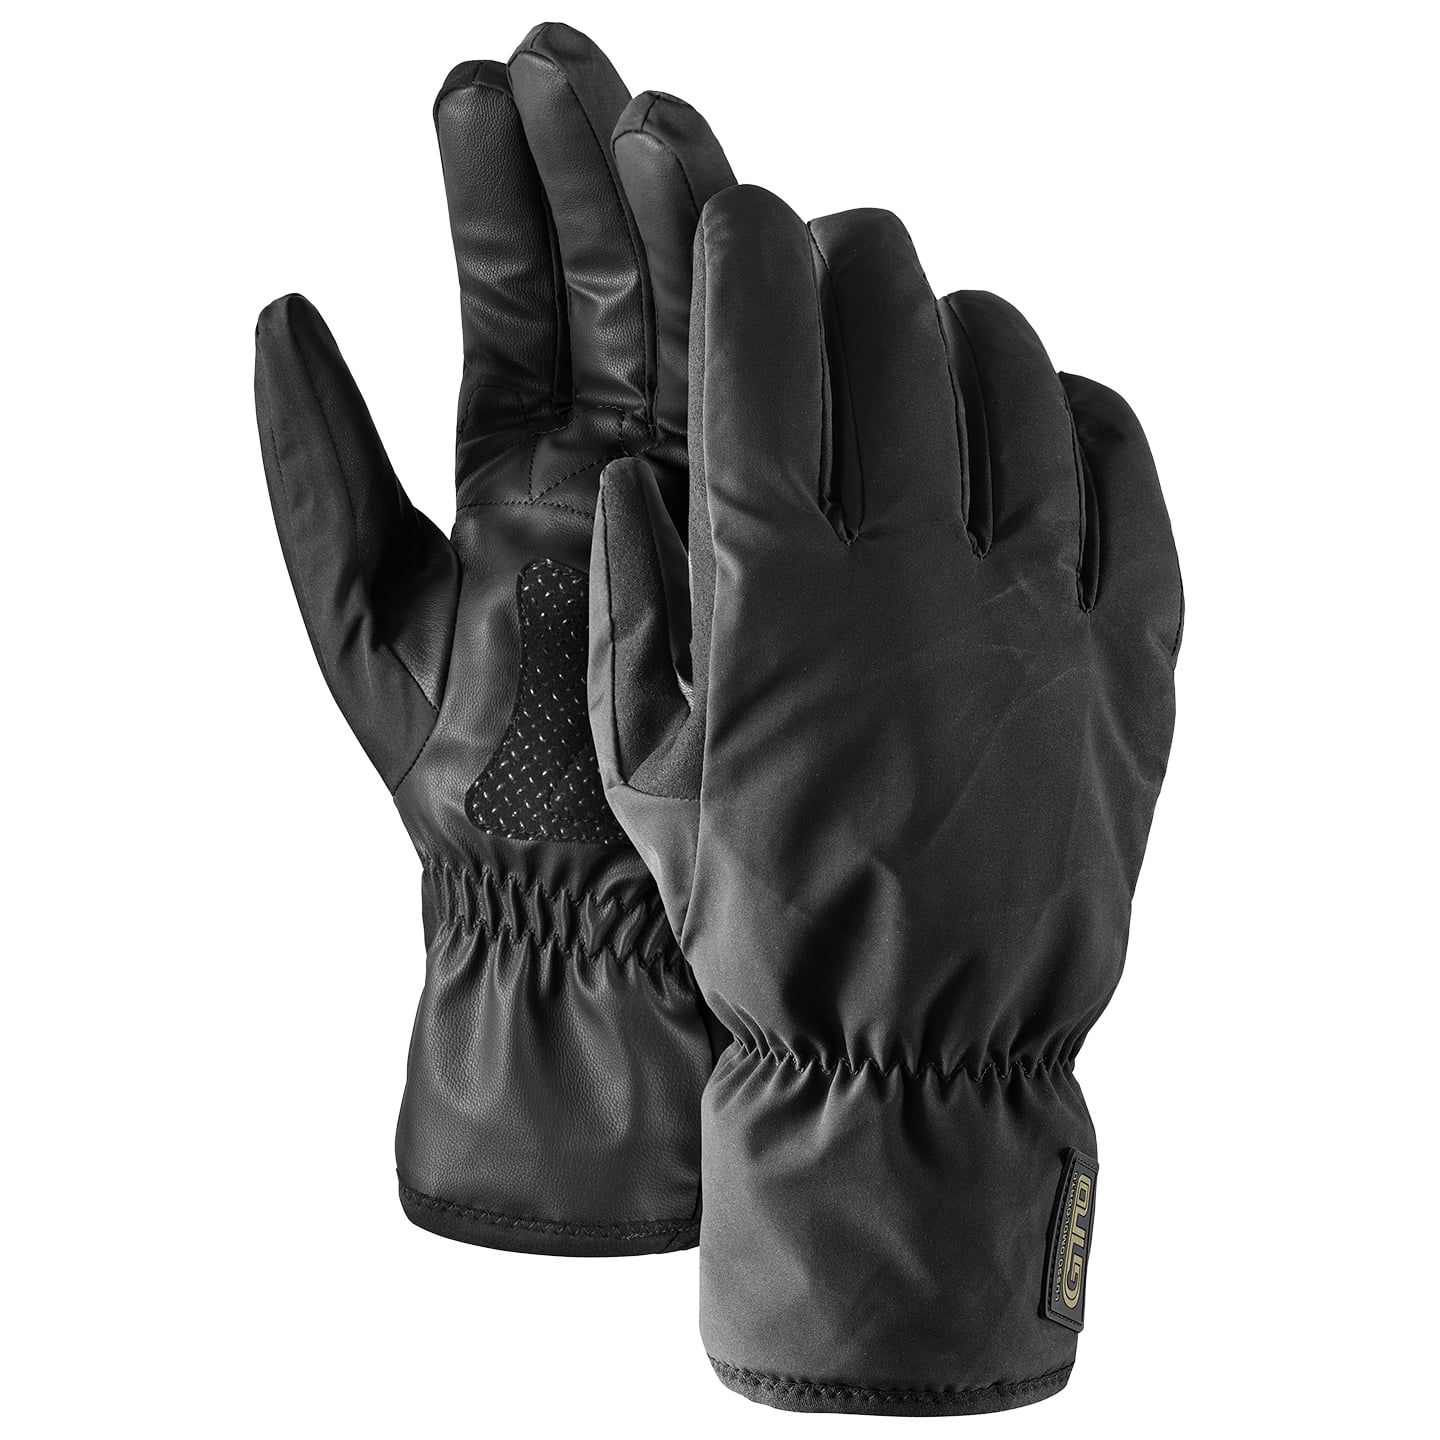 ASSOS Winter Gloves GTO Ultraz Winter Cycling Gloves, for men, size L, Cycling gloves, Bike gear